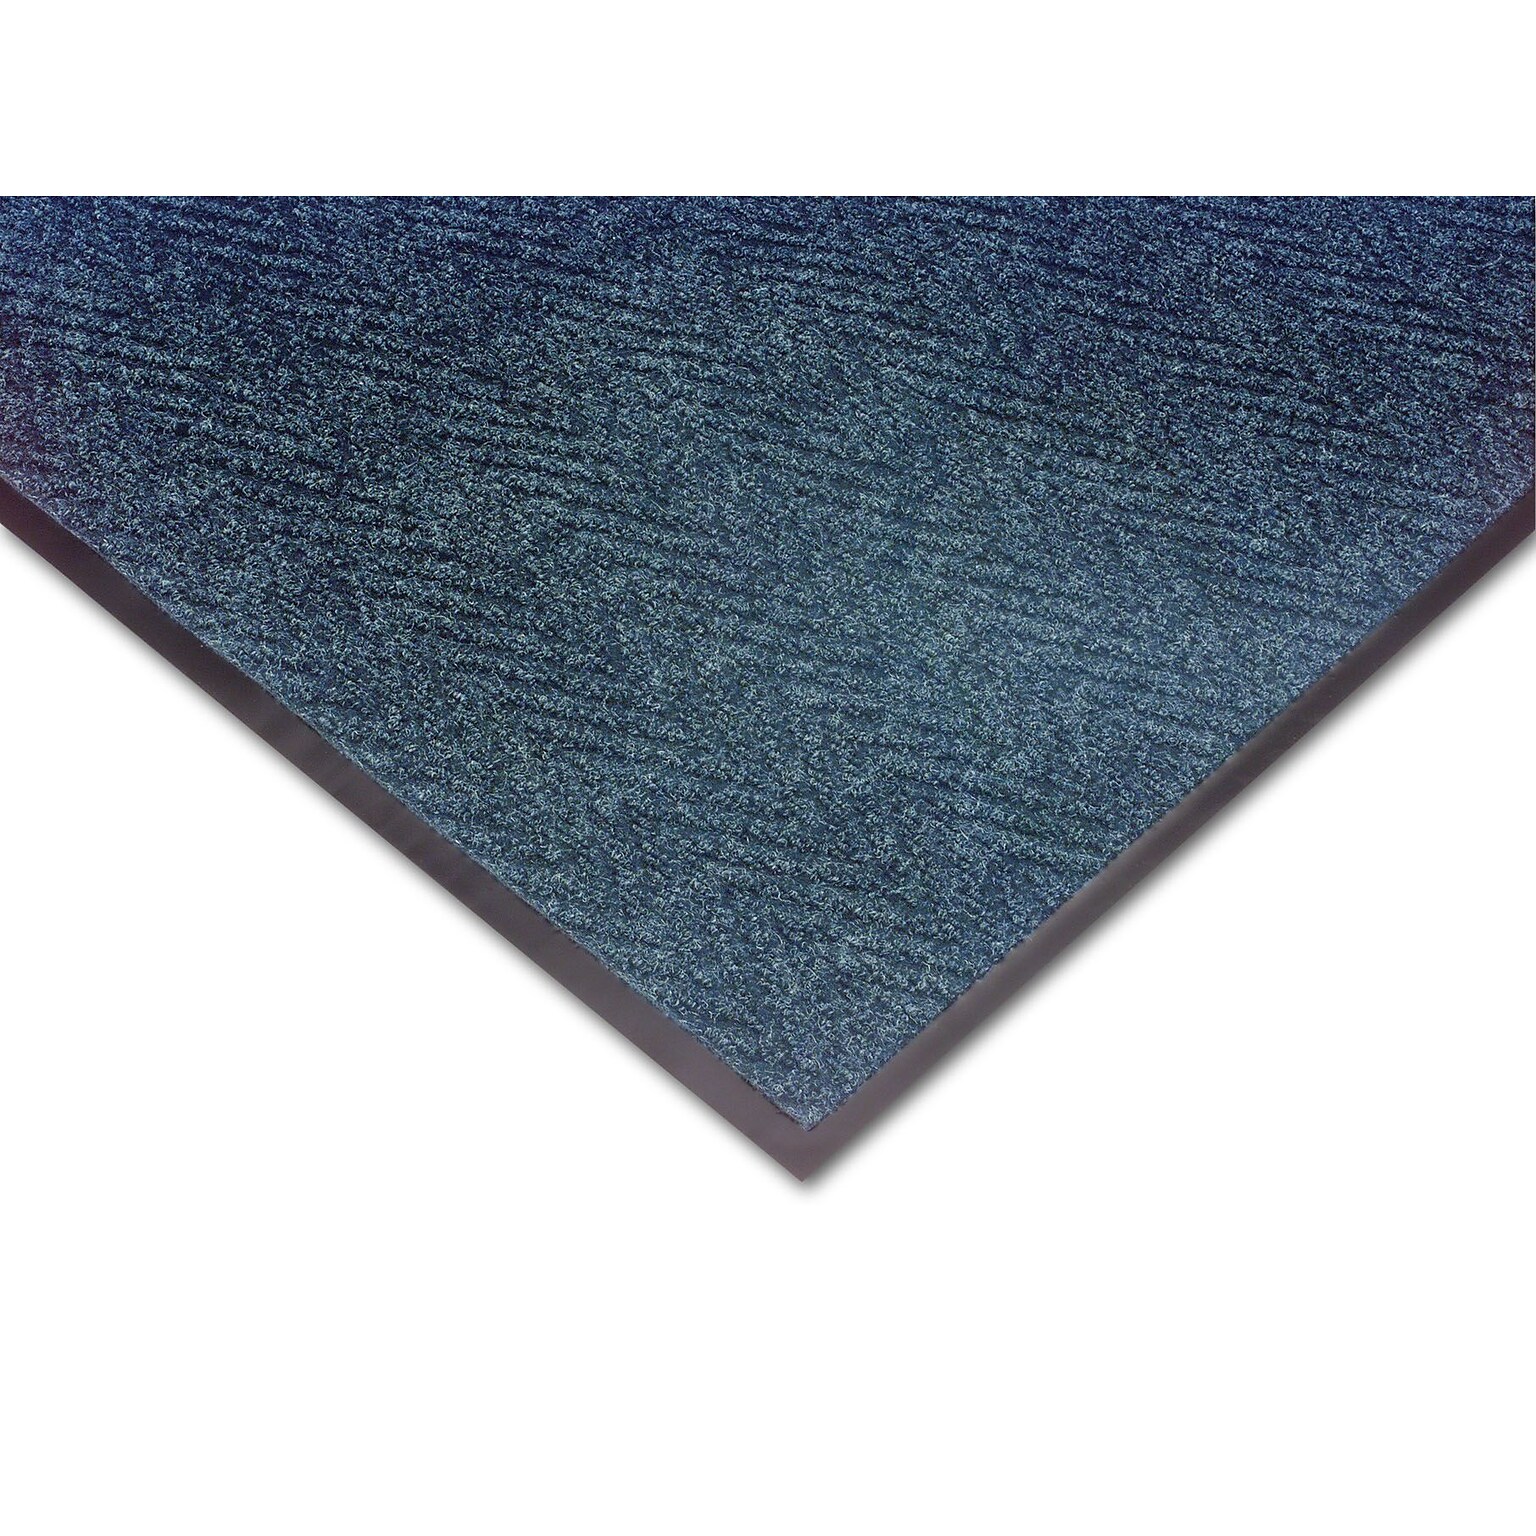 NoTrax Akro Chevron Fiber Best Entrance Floor Mat, 2 x 3, Slate Blue (105S0023BU)